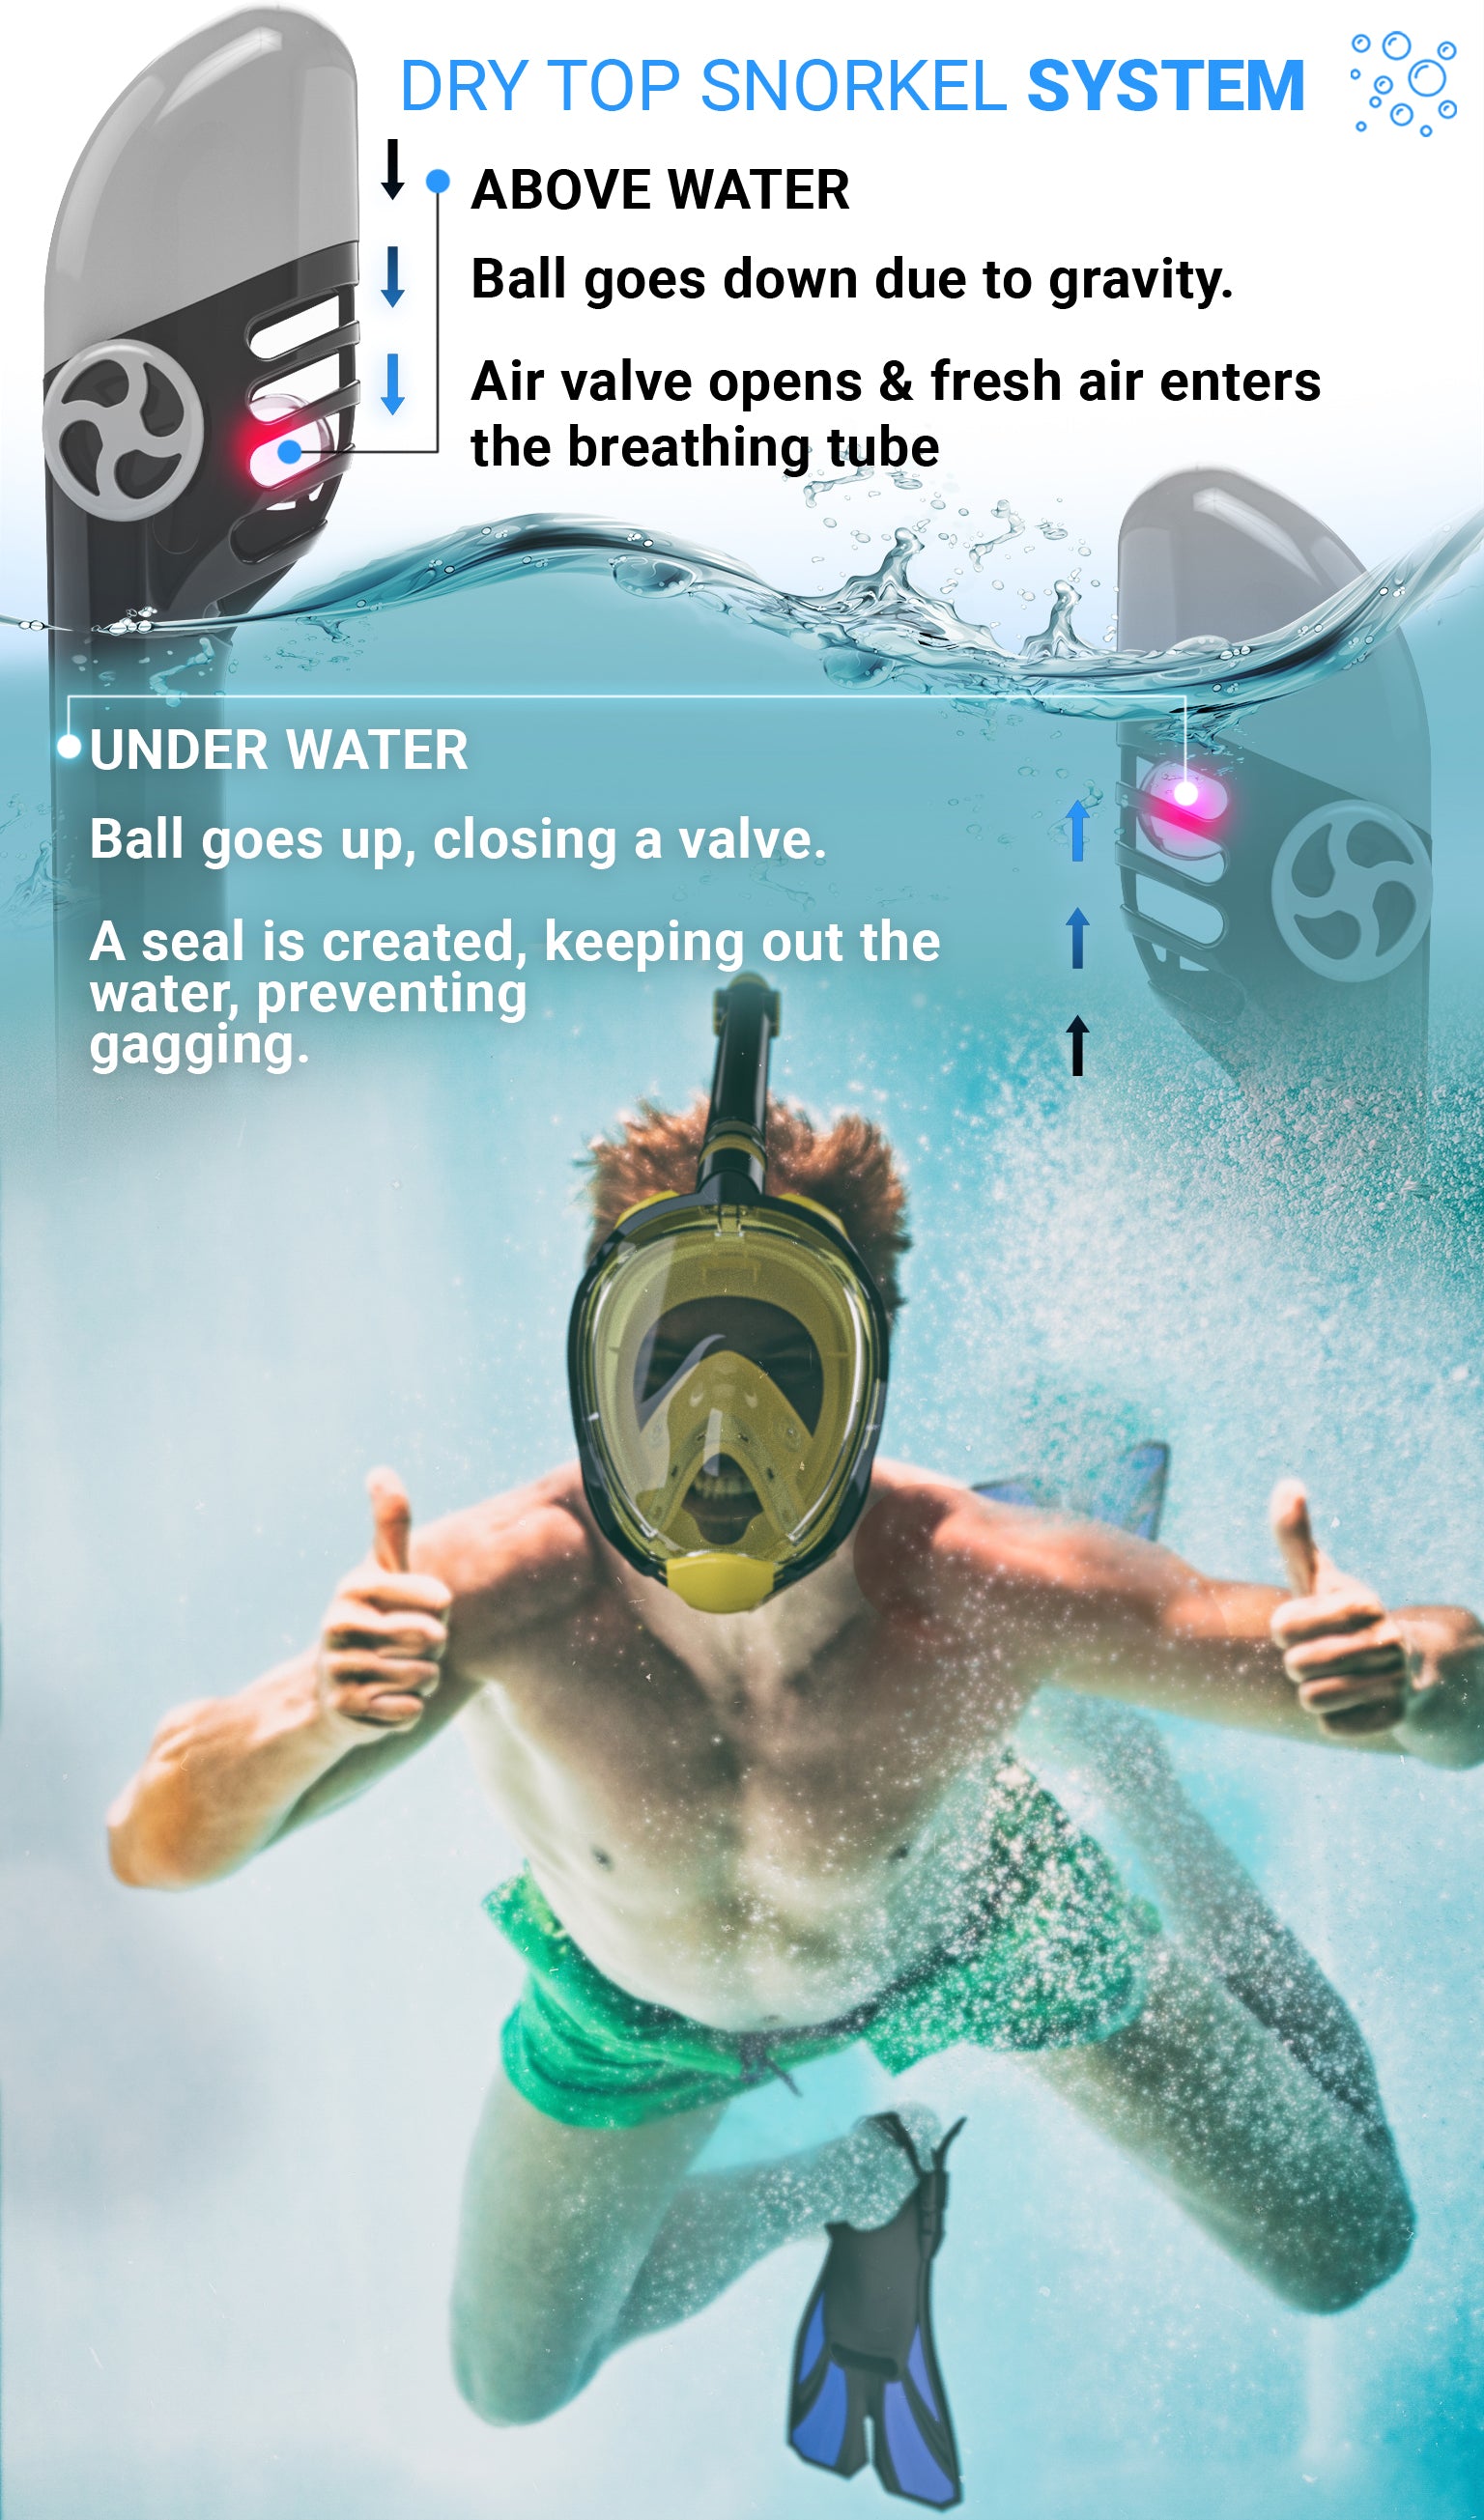 Snorkel Set Adult (Yellow) - Full Face Mask and Adjustable Swim Fins, 180° Panoramic View, Anti Fog and Anti Leak